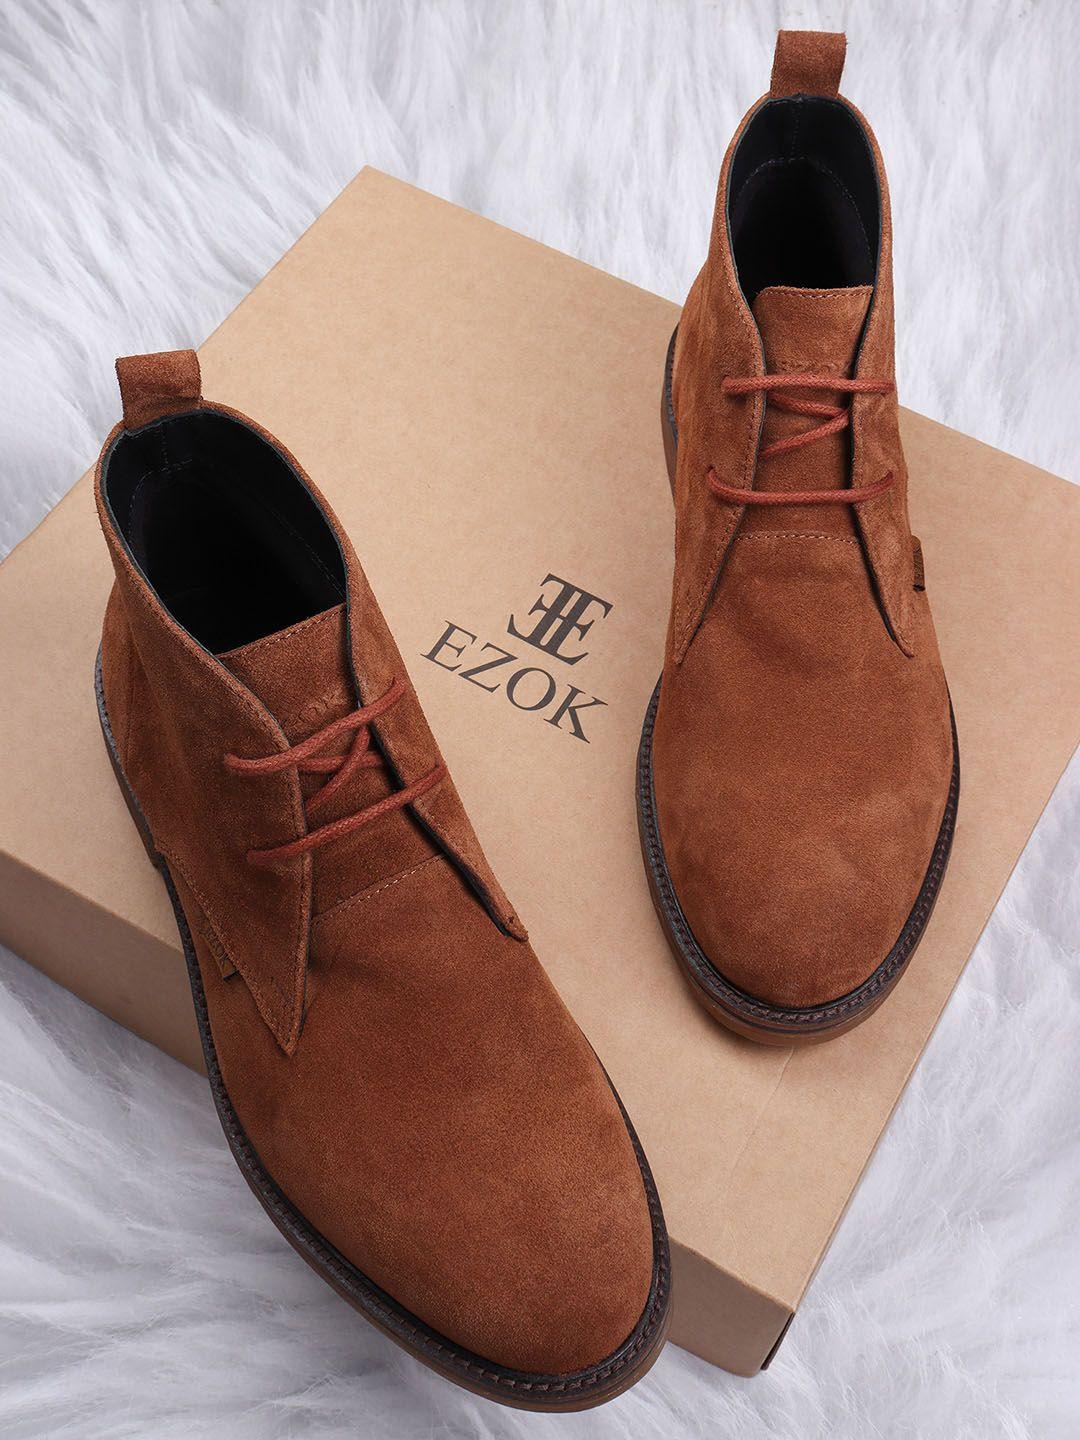 ezok men camel brown mid-top leather boots